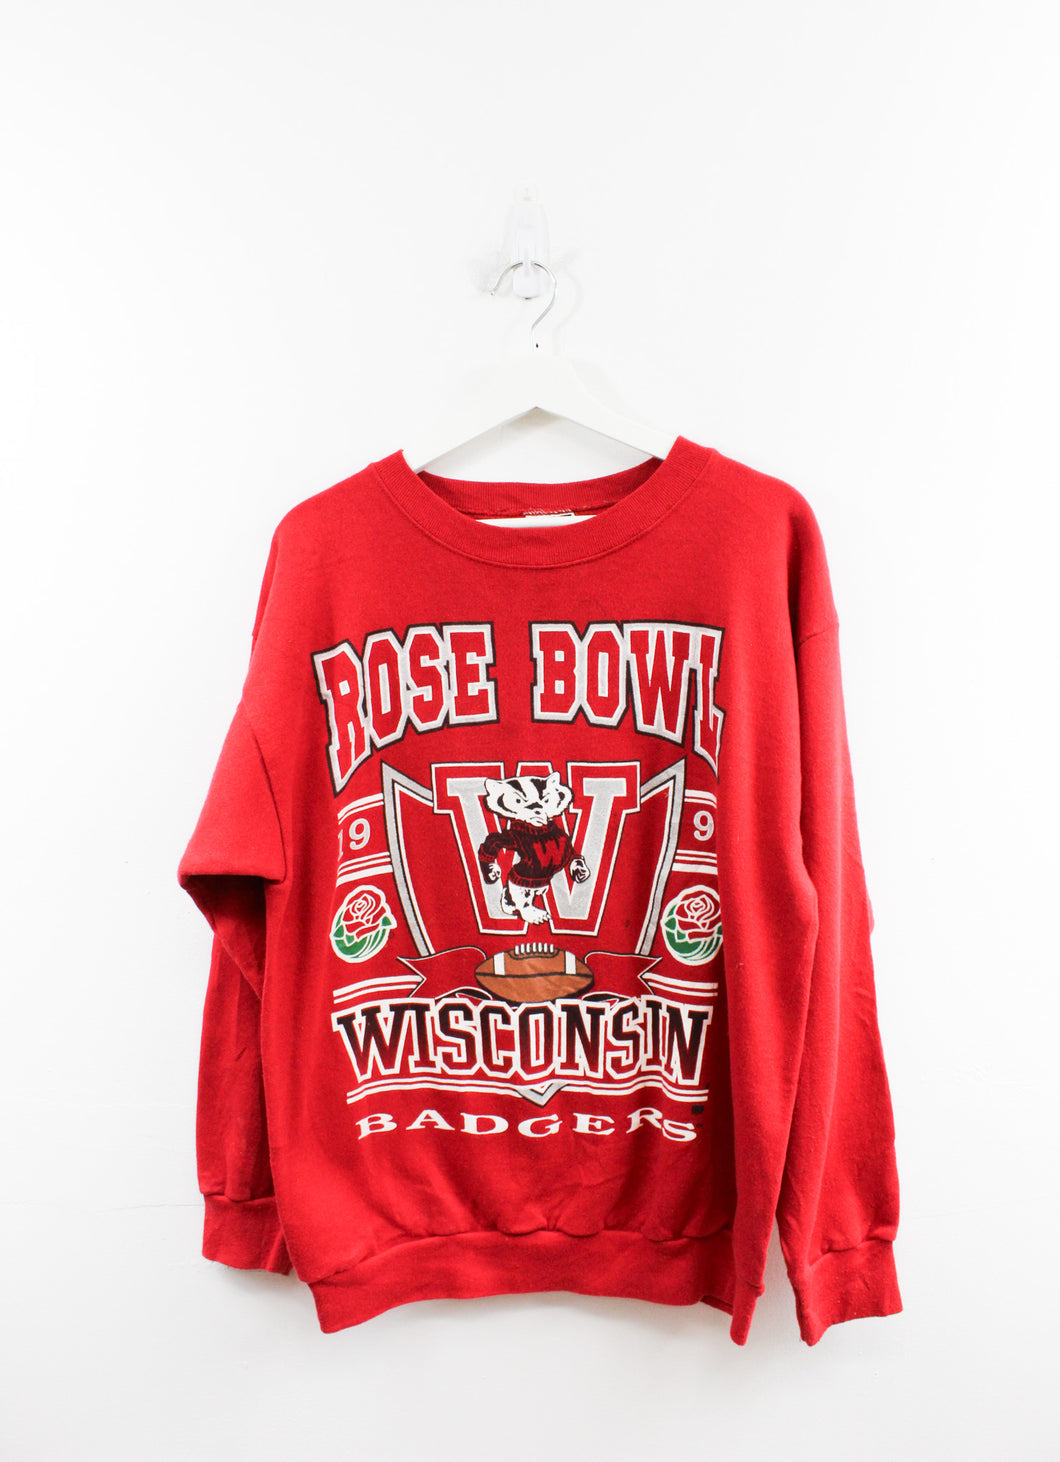 Vintage 1994 Wisconsin Badgers Rose Bowl Crewneck